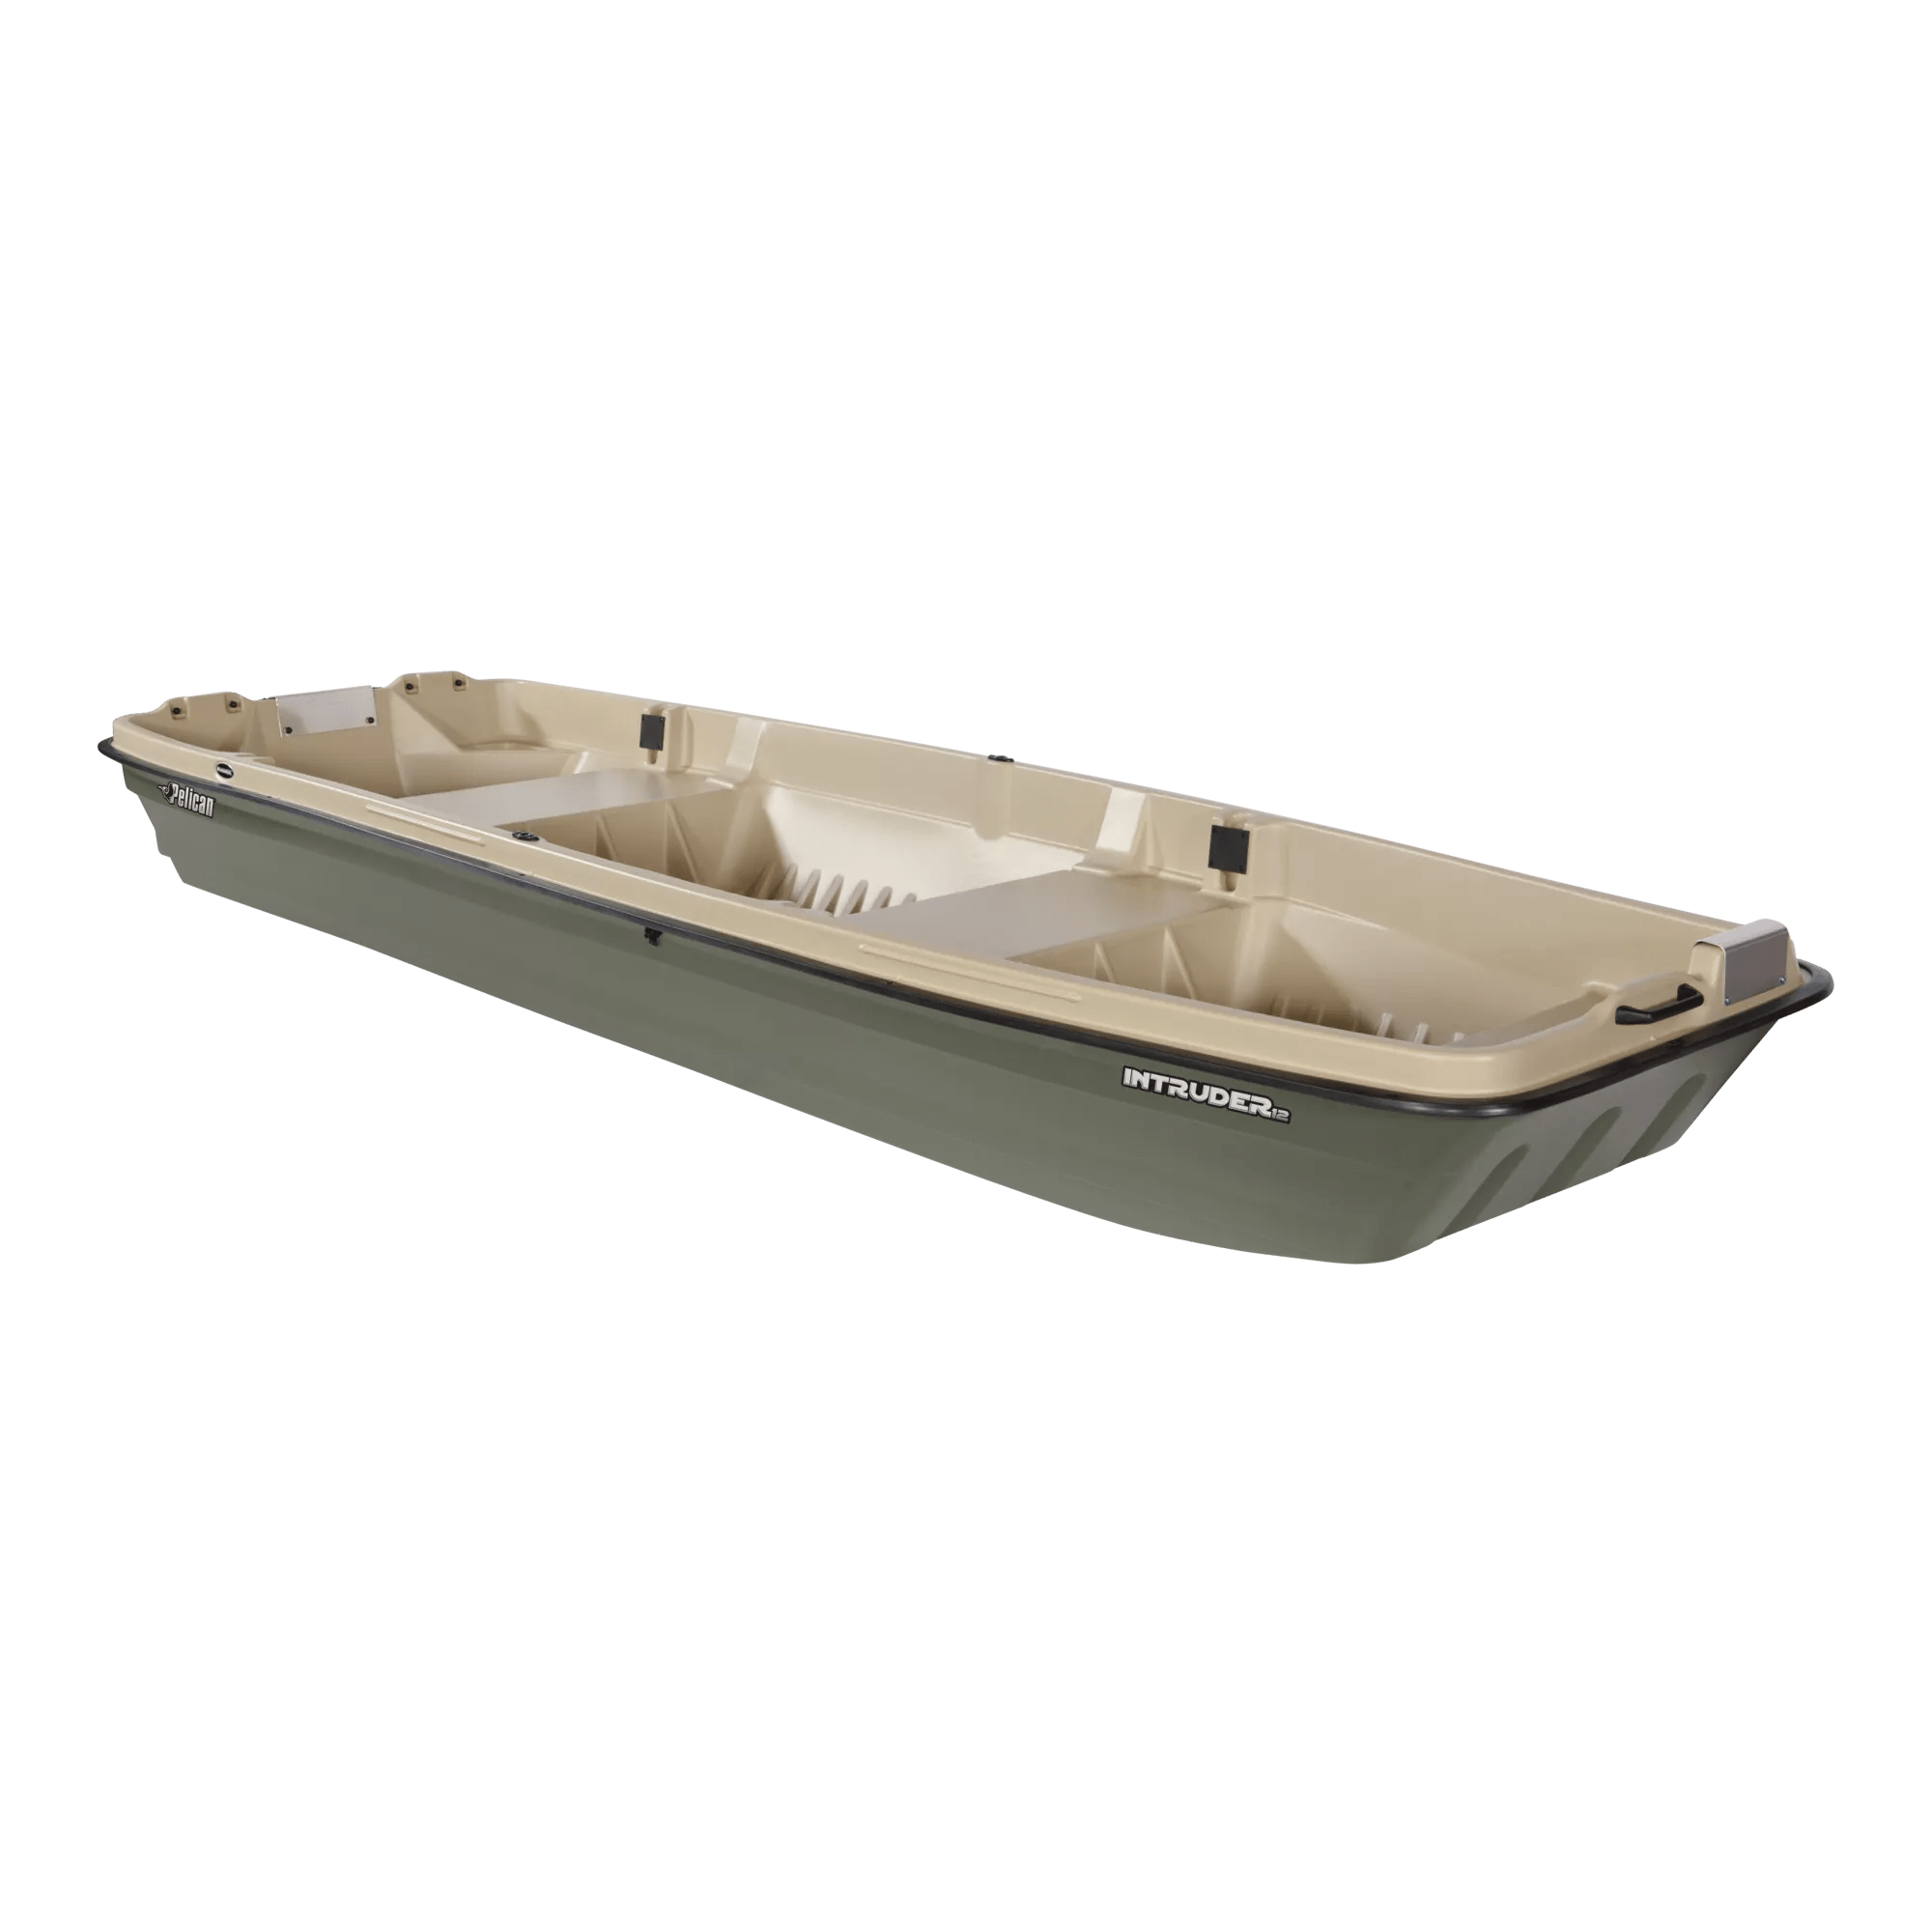 PELICAN - Intruder 12 Fishing Boat - Green - BJA12P105-00 - 